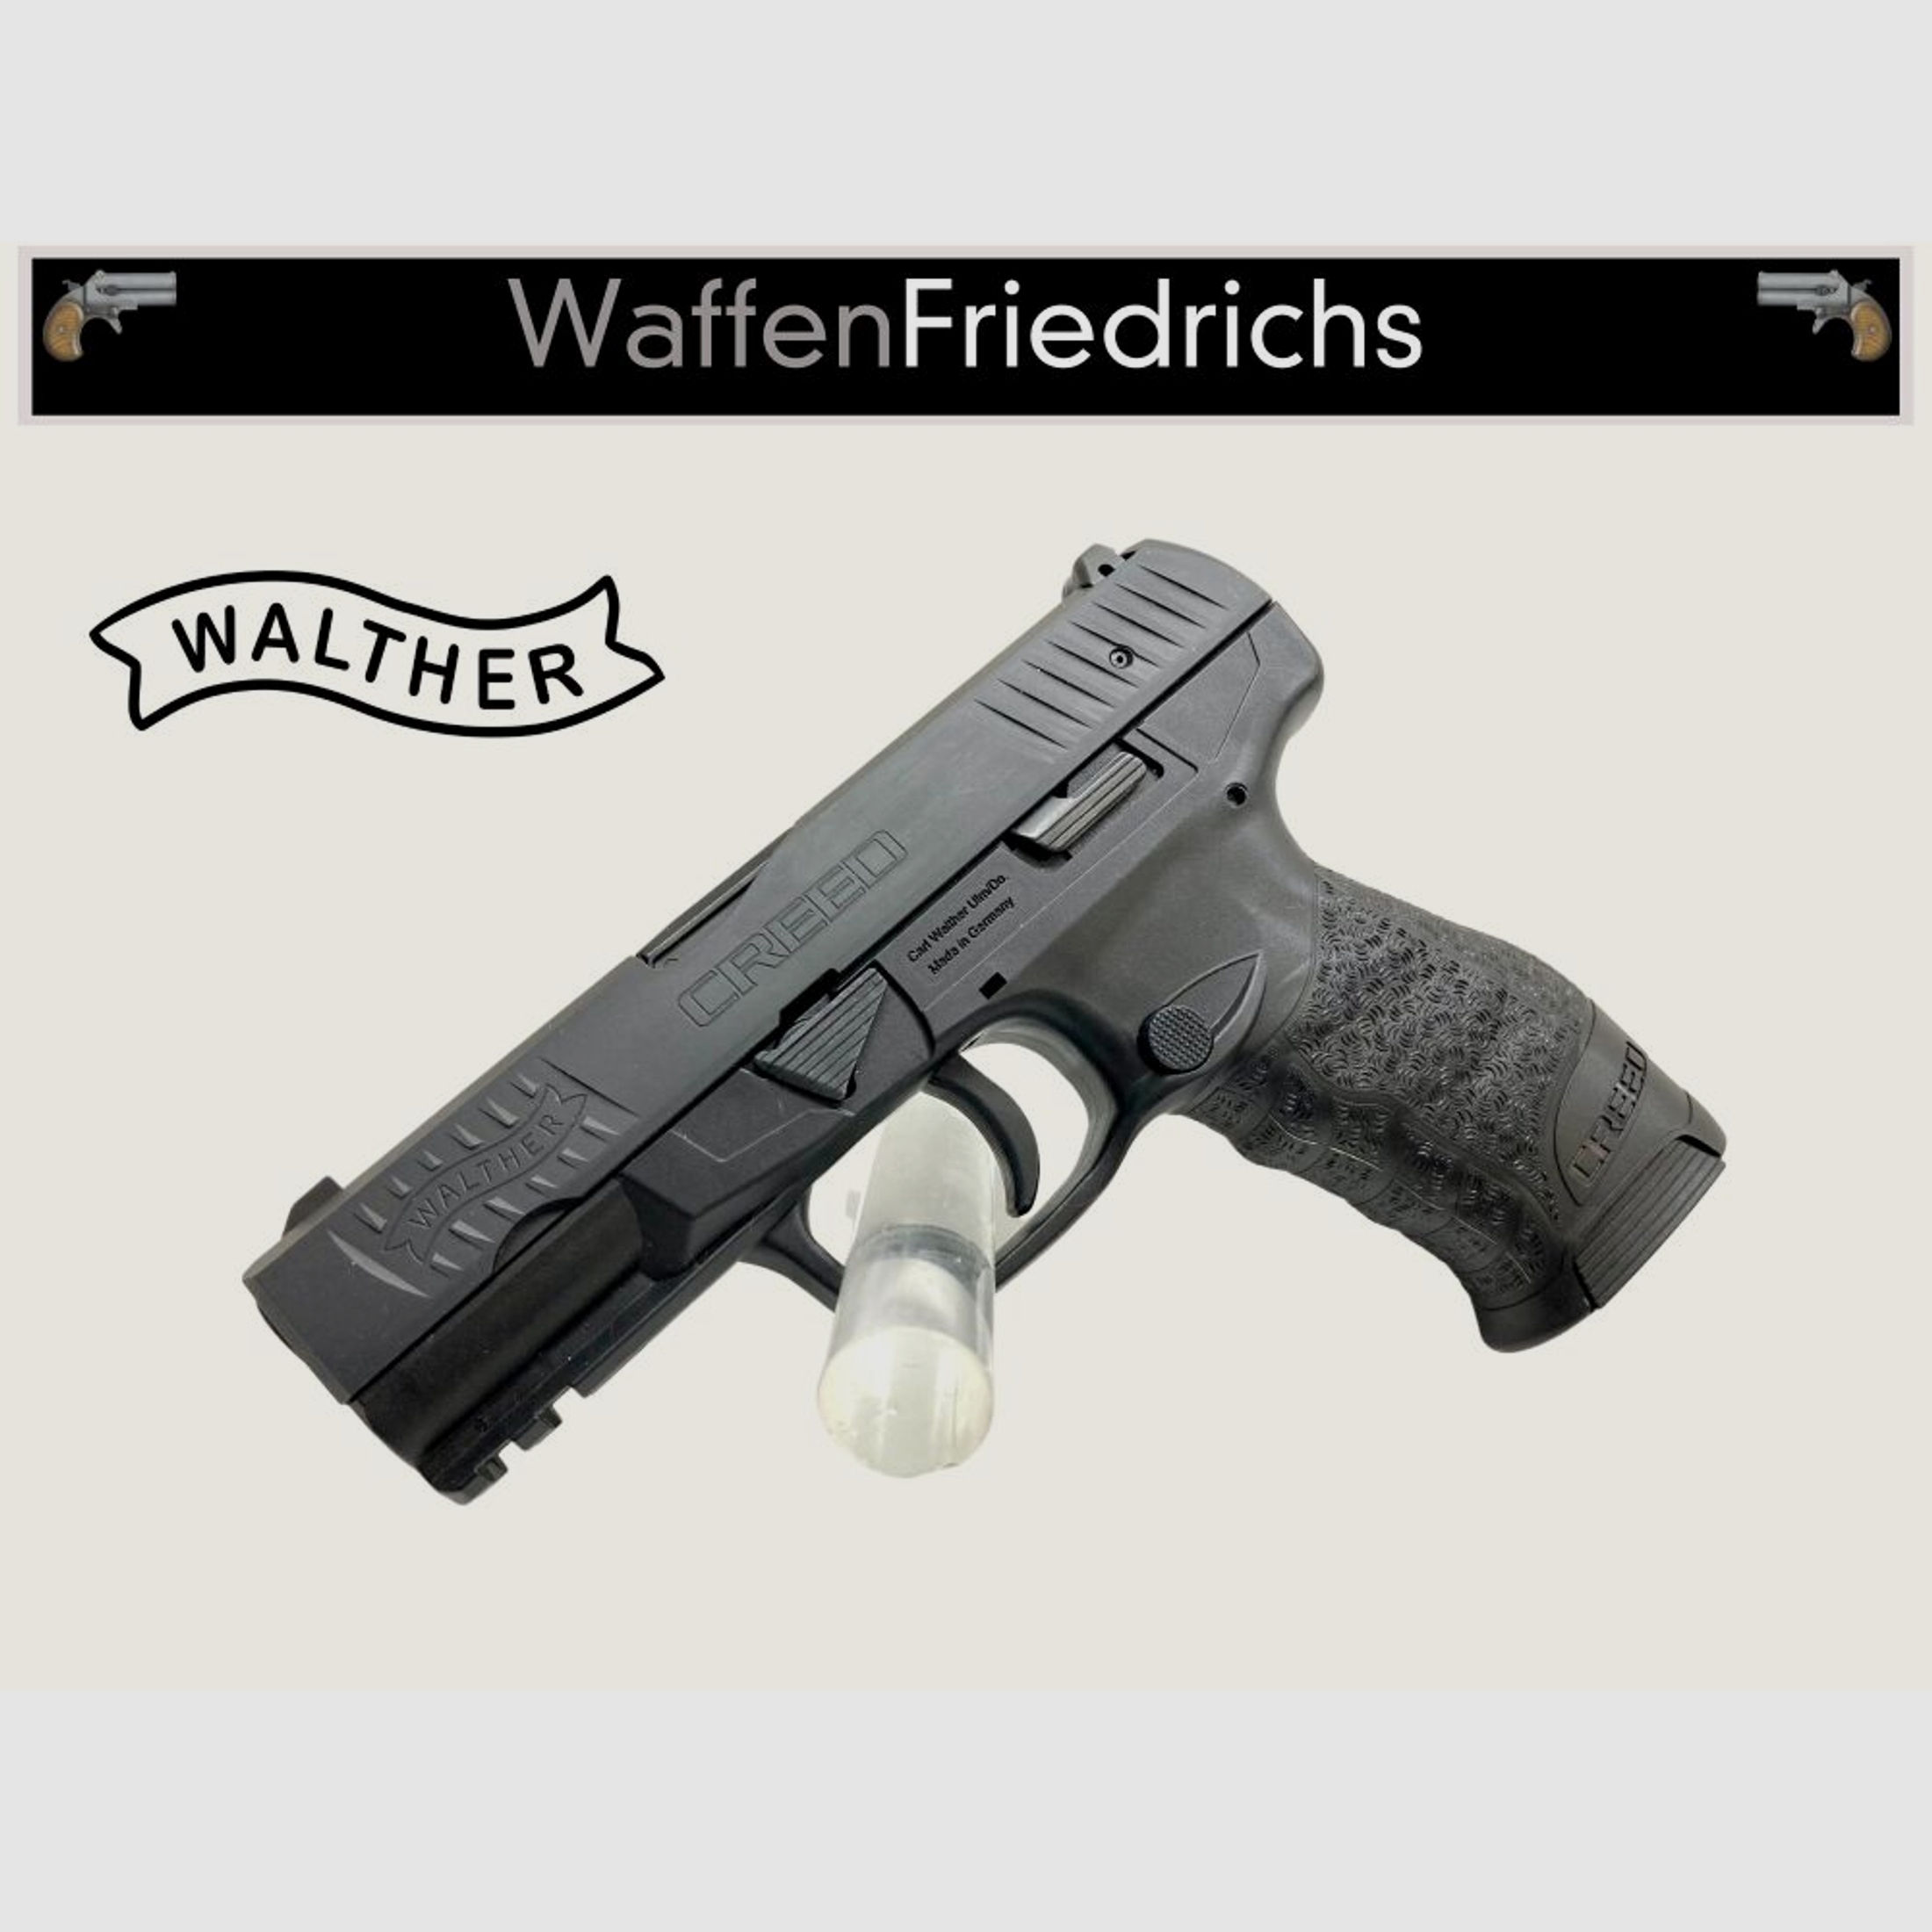 WALTHER	 CREED - Waffen Friedrichs